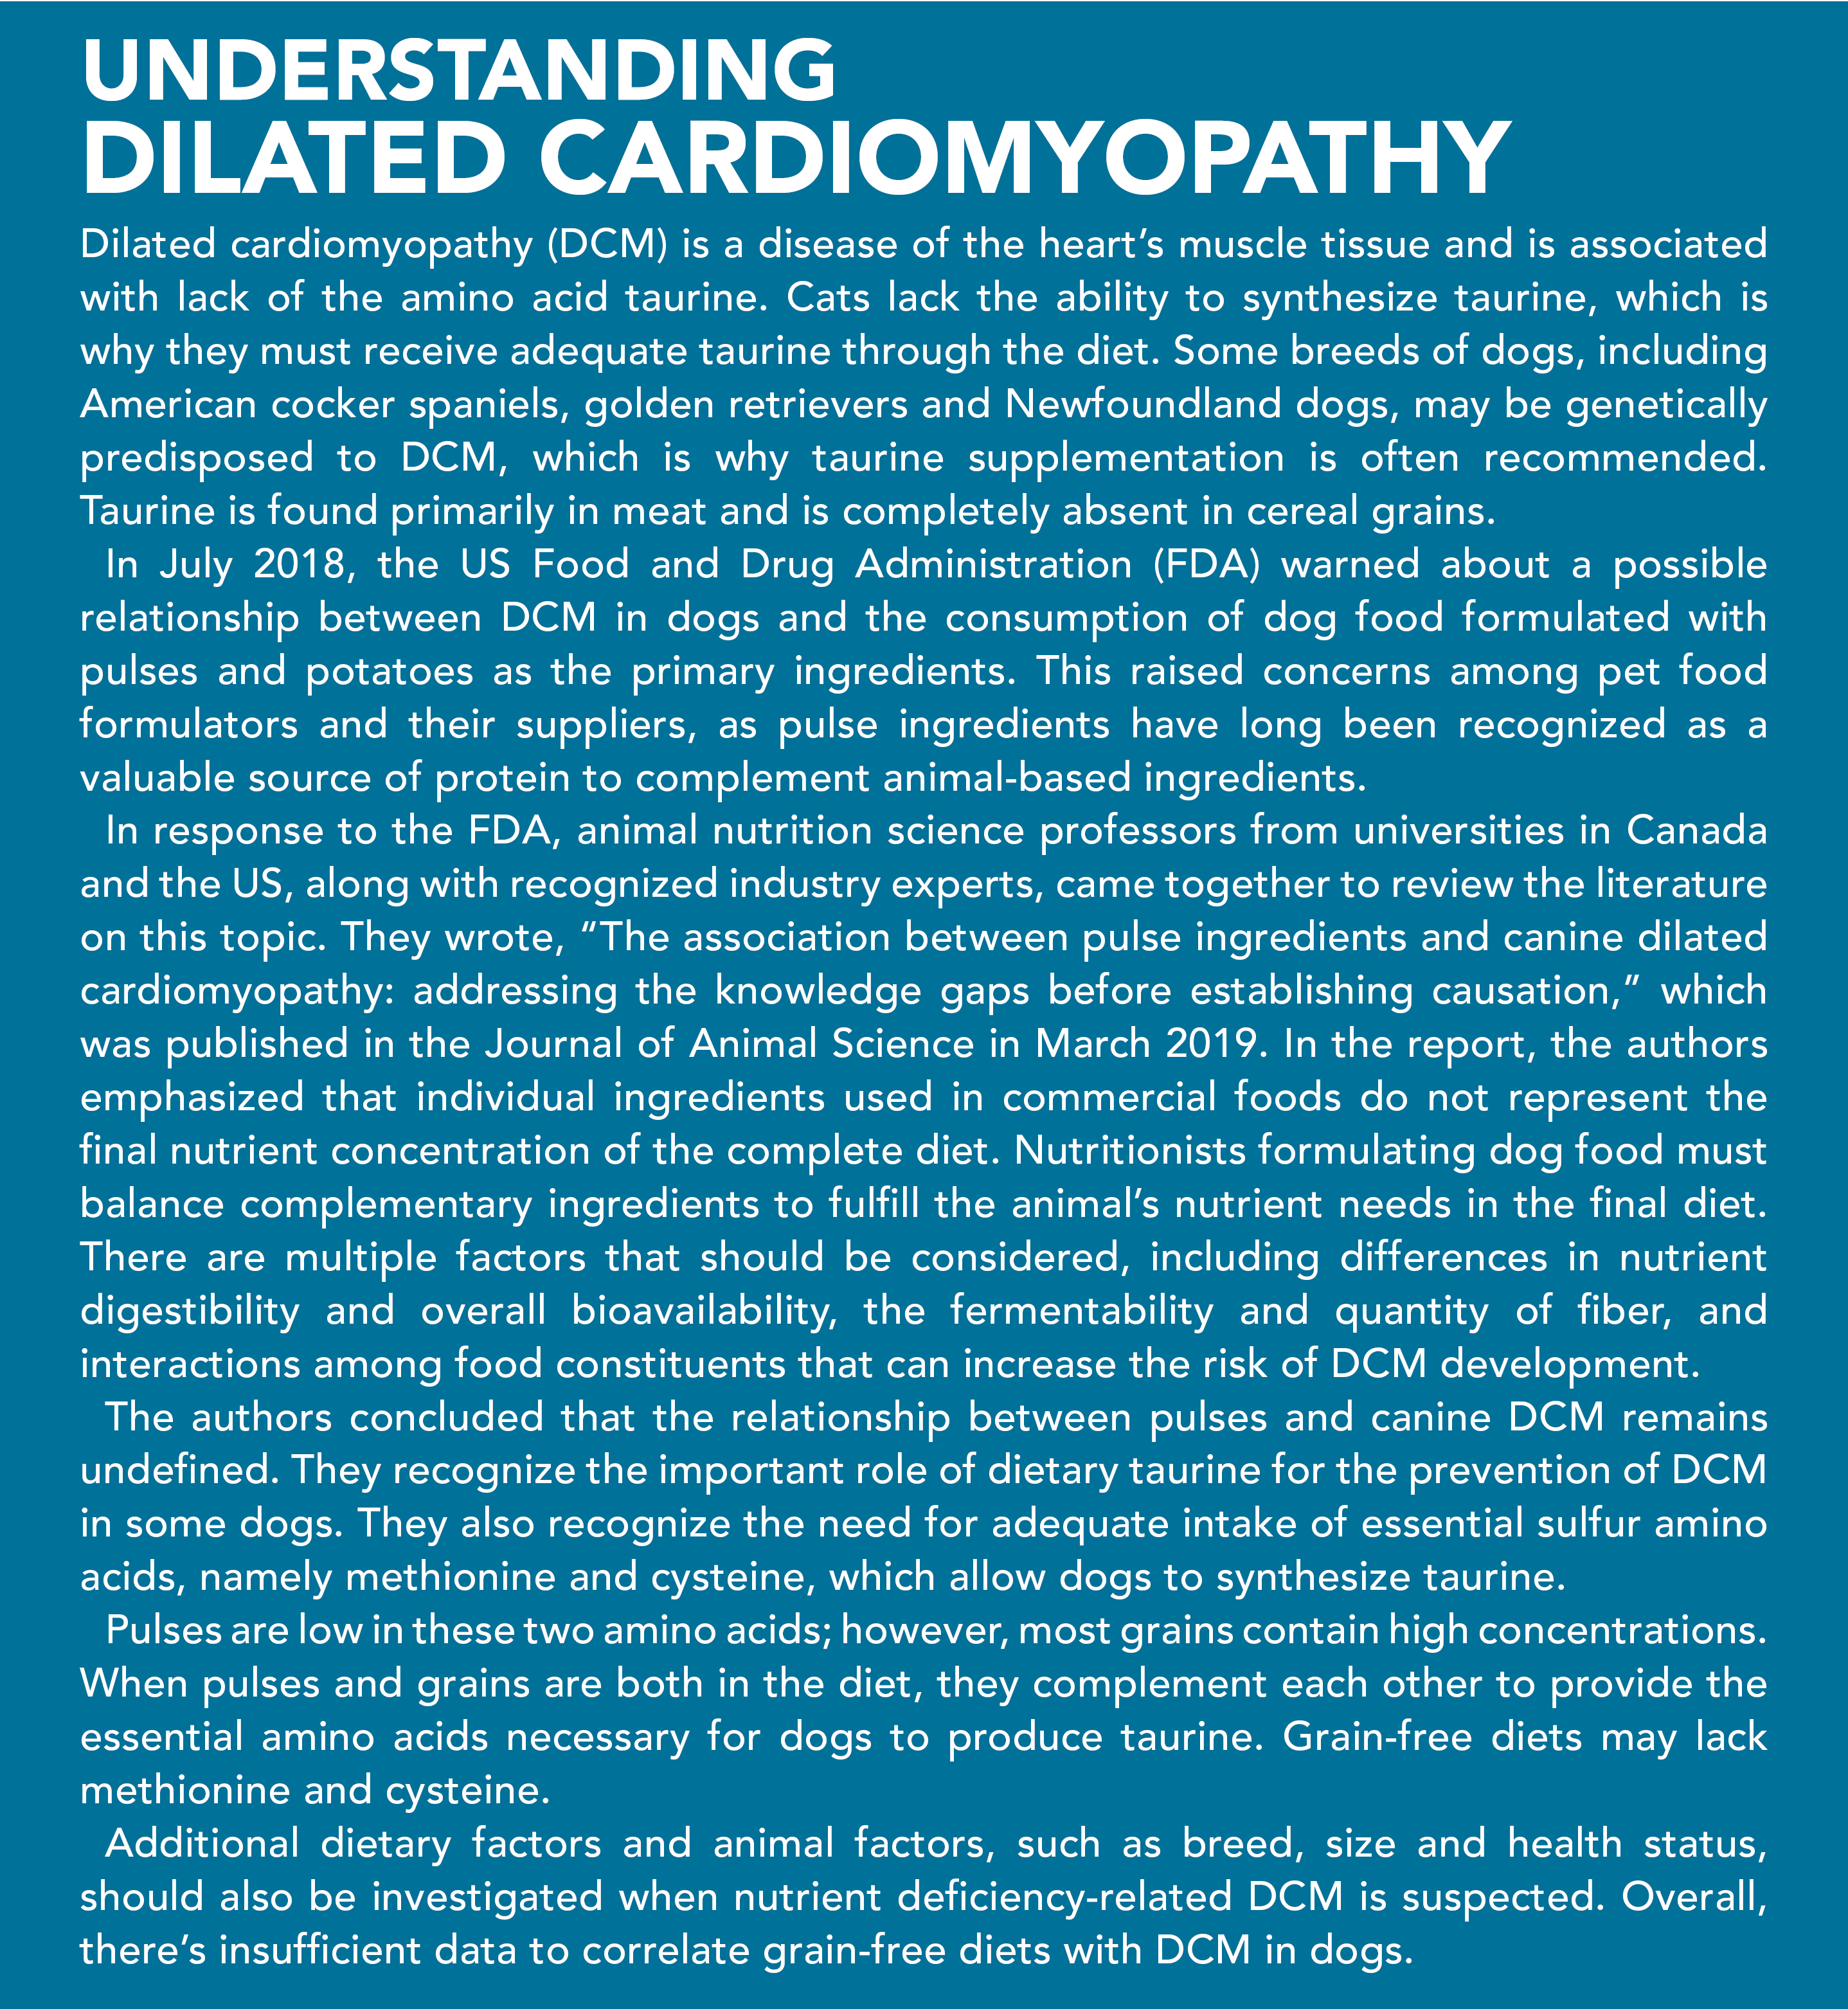 Sidebar: Understanding dilated cardiomyopathy (DCM) in dogs